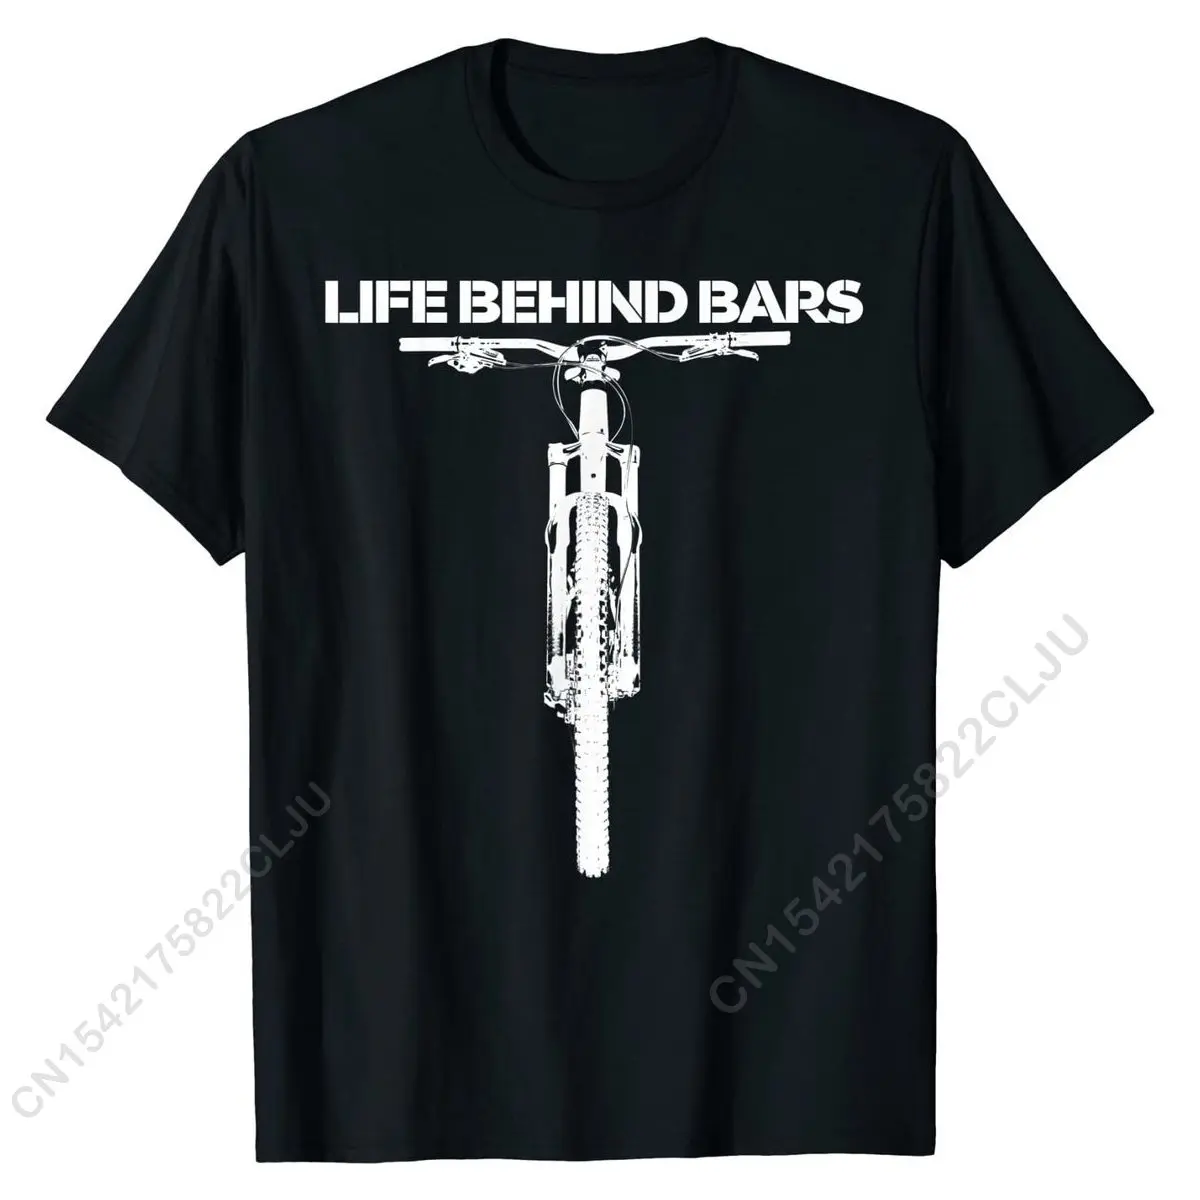 Life Behind Bars Funny MTB Mountain Biking T-Shirt T Shirts Tops Shirts Cheap Cotton Summer Printed Men's